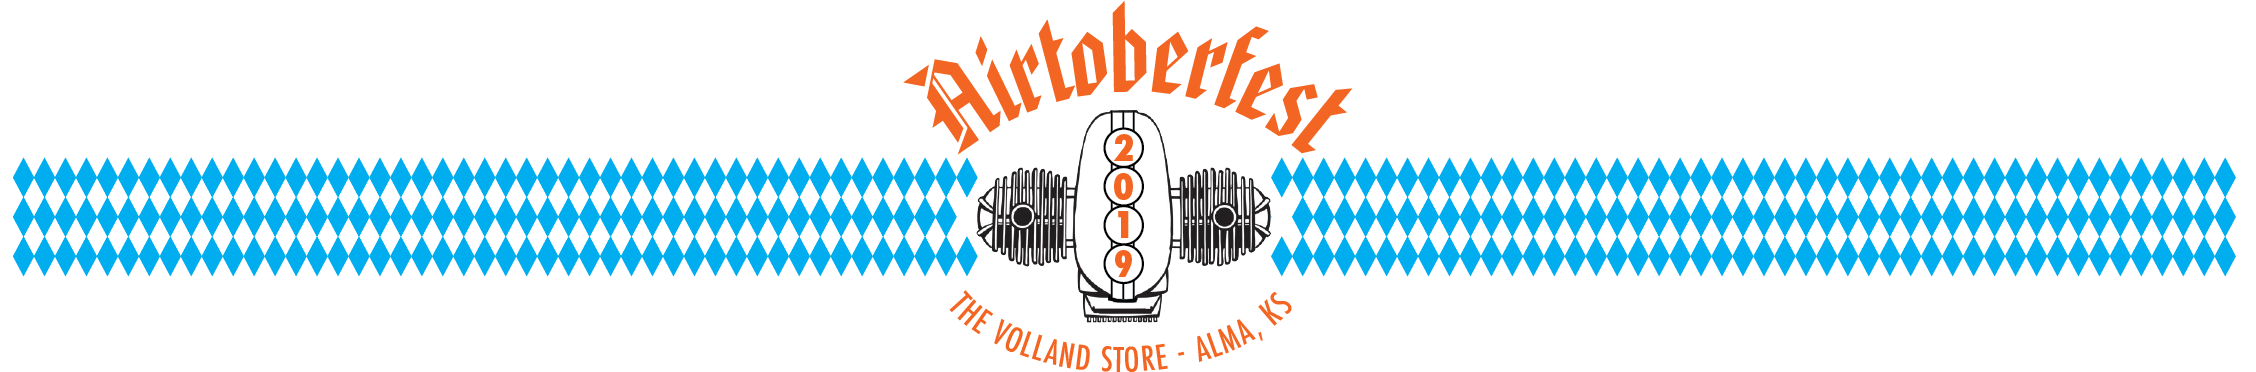 Airtoberfest 2019 Banner